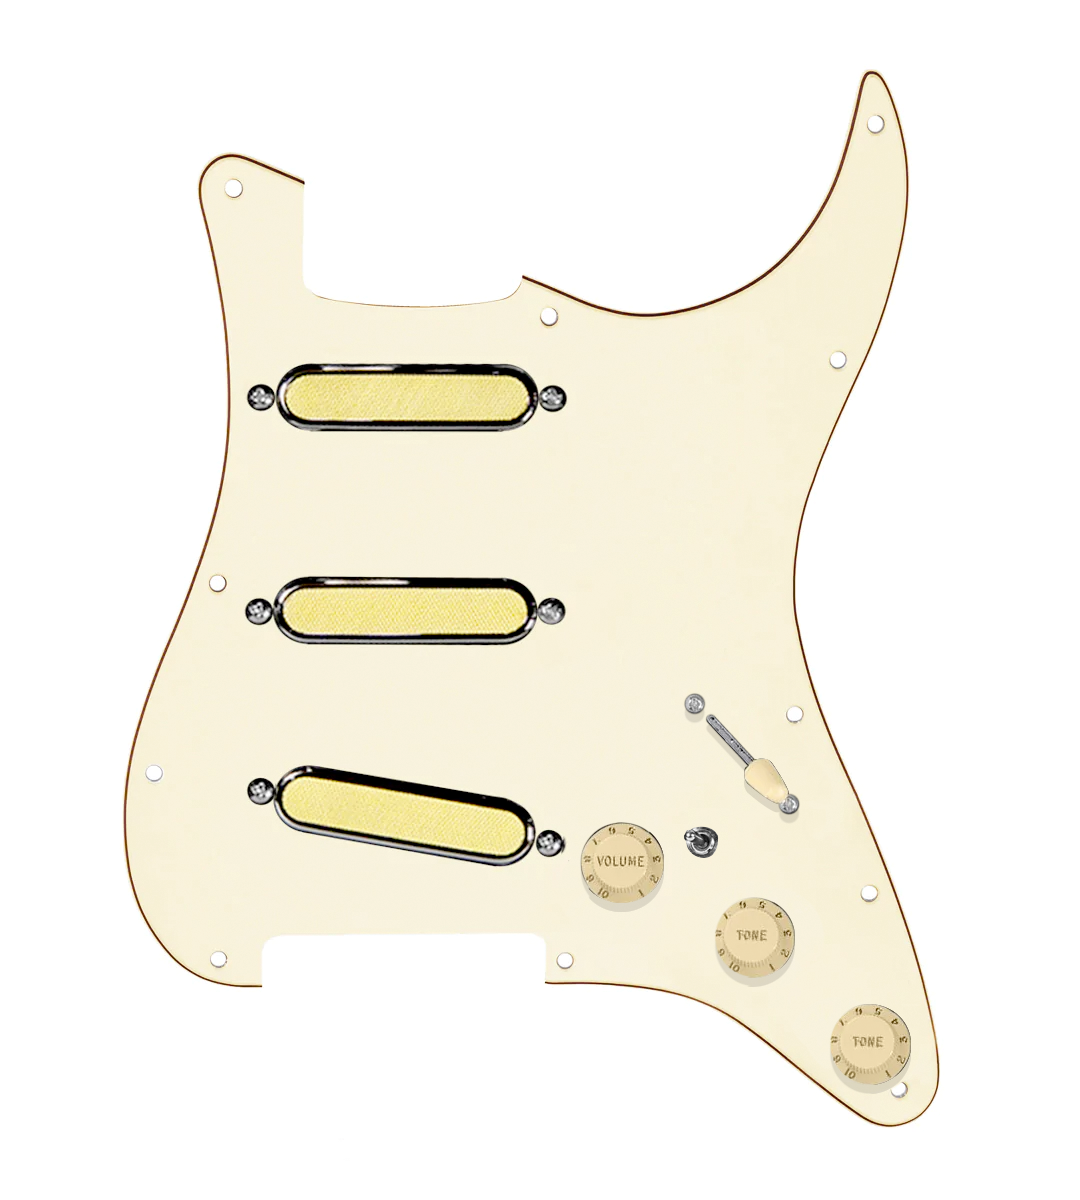 Gold Foil Loaded Pickguard for Stratocasters® - SLPG-GLDFL-AW-AWPG-S7W-MT